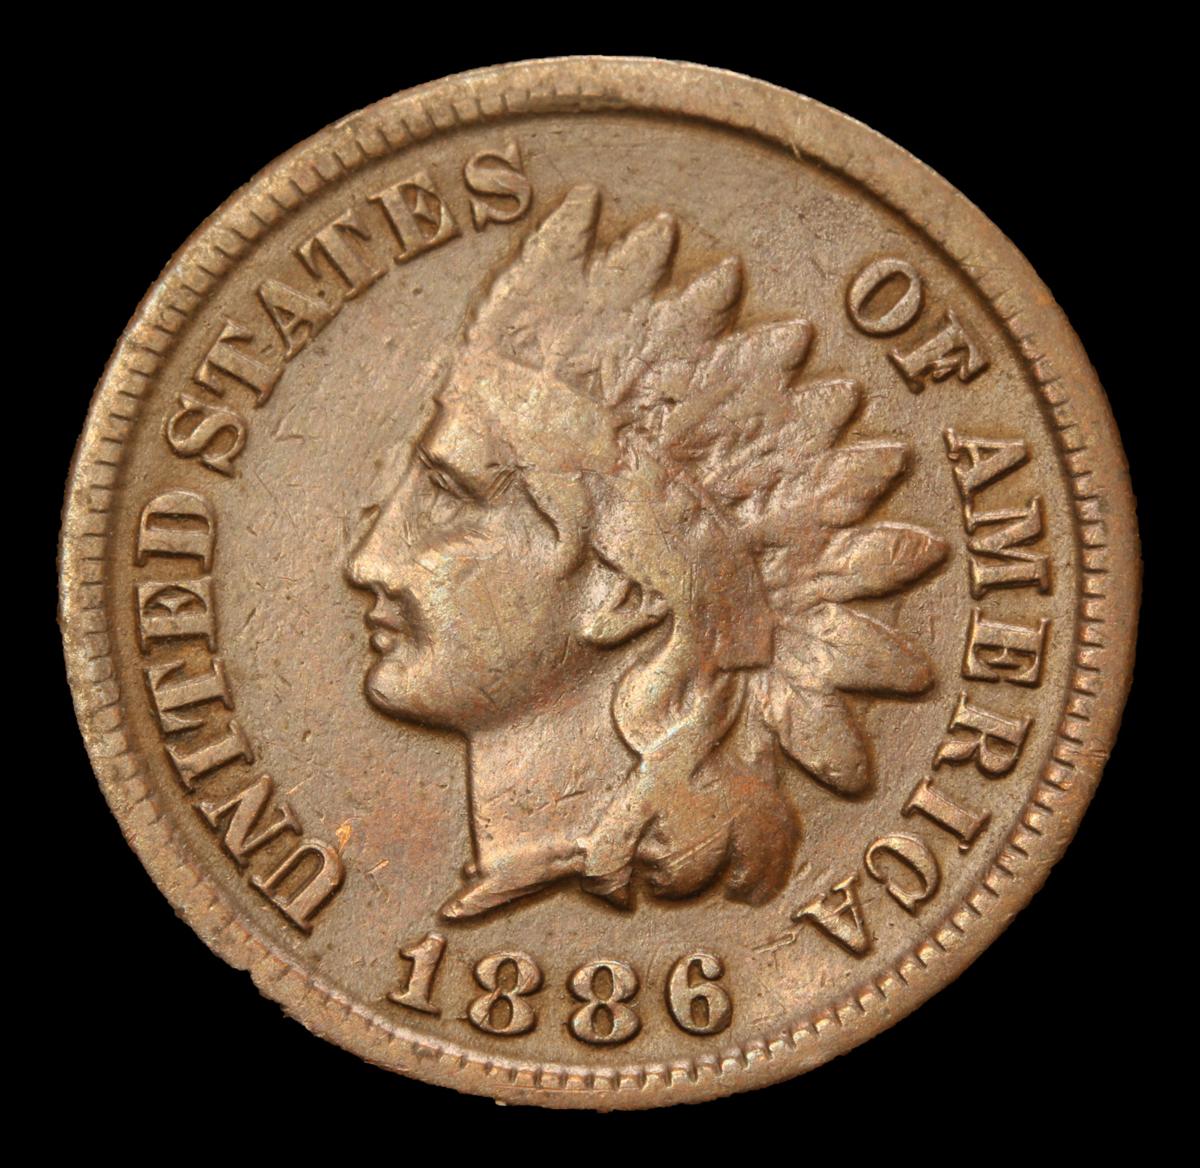 1886 TY1 Semi Key Date . Indian Cent 1c Grades f+